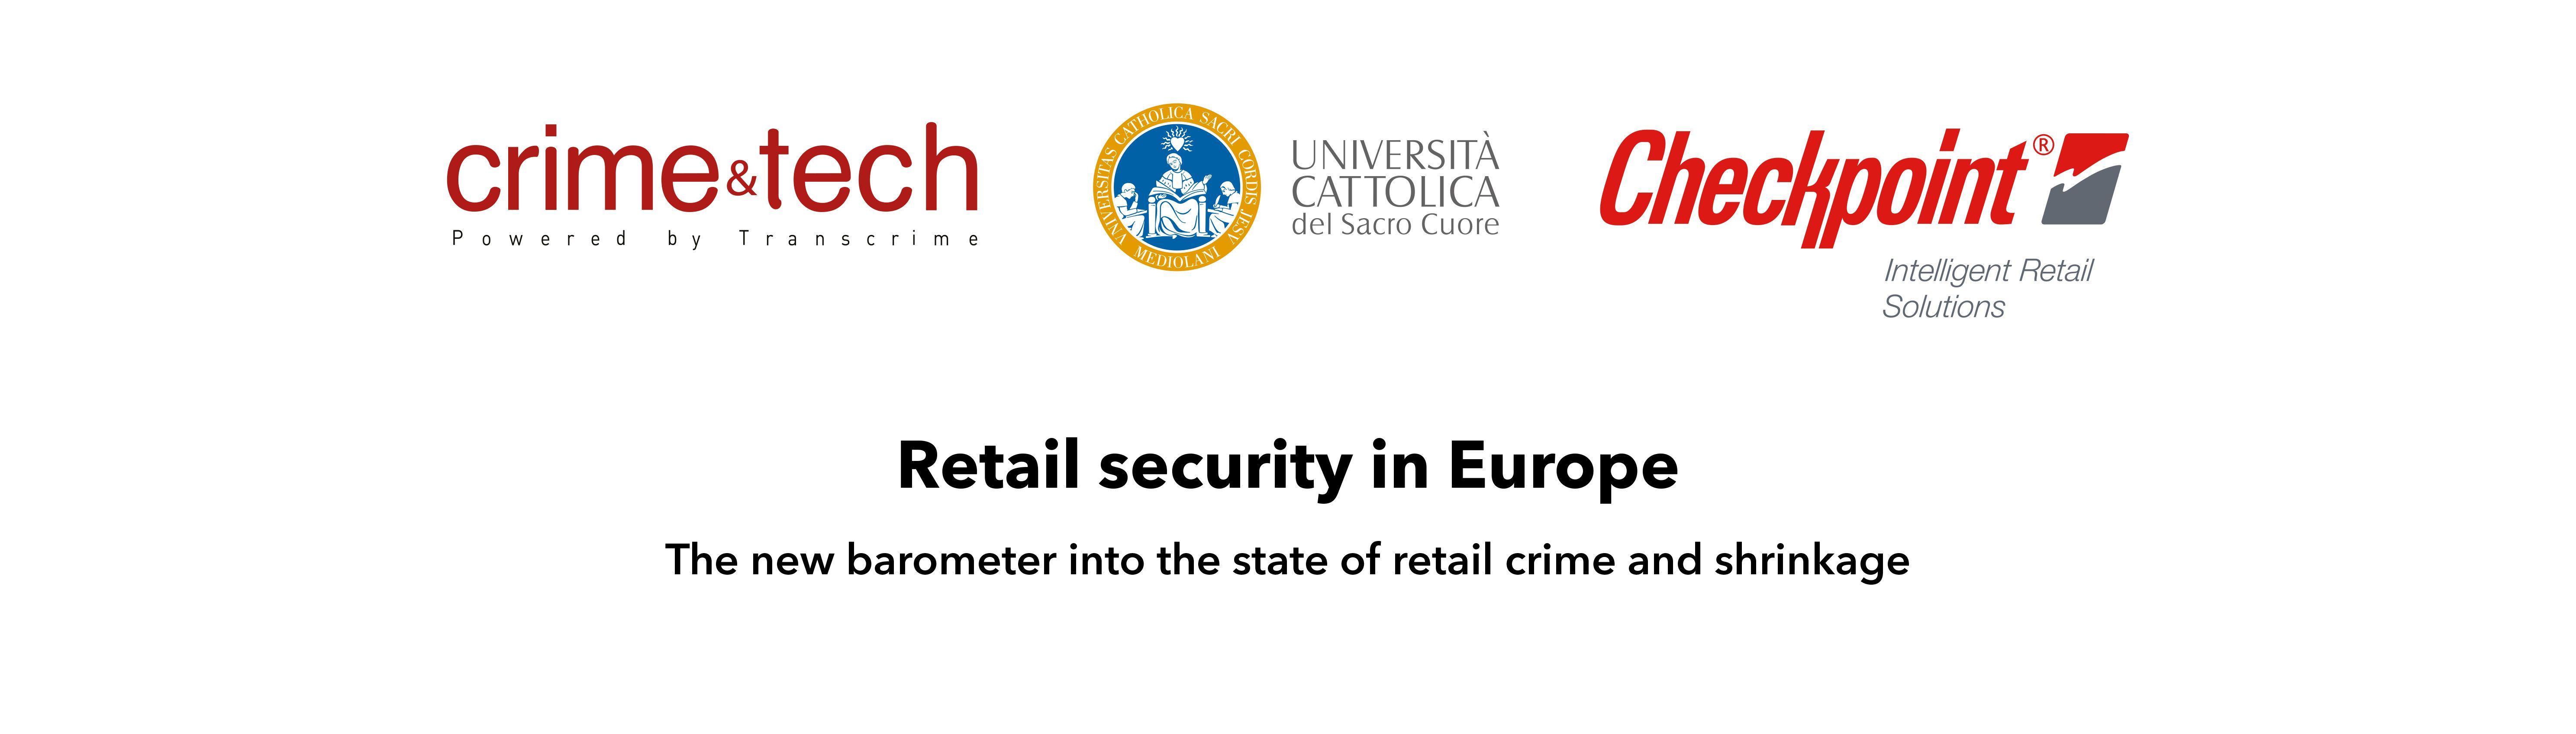 European Retail Logo - Checkpoint announces the new barometer into European retail losses